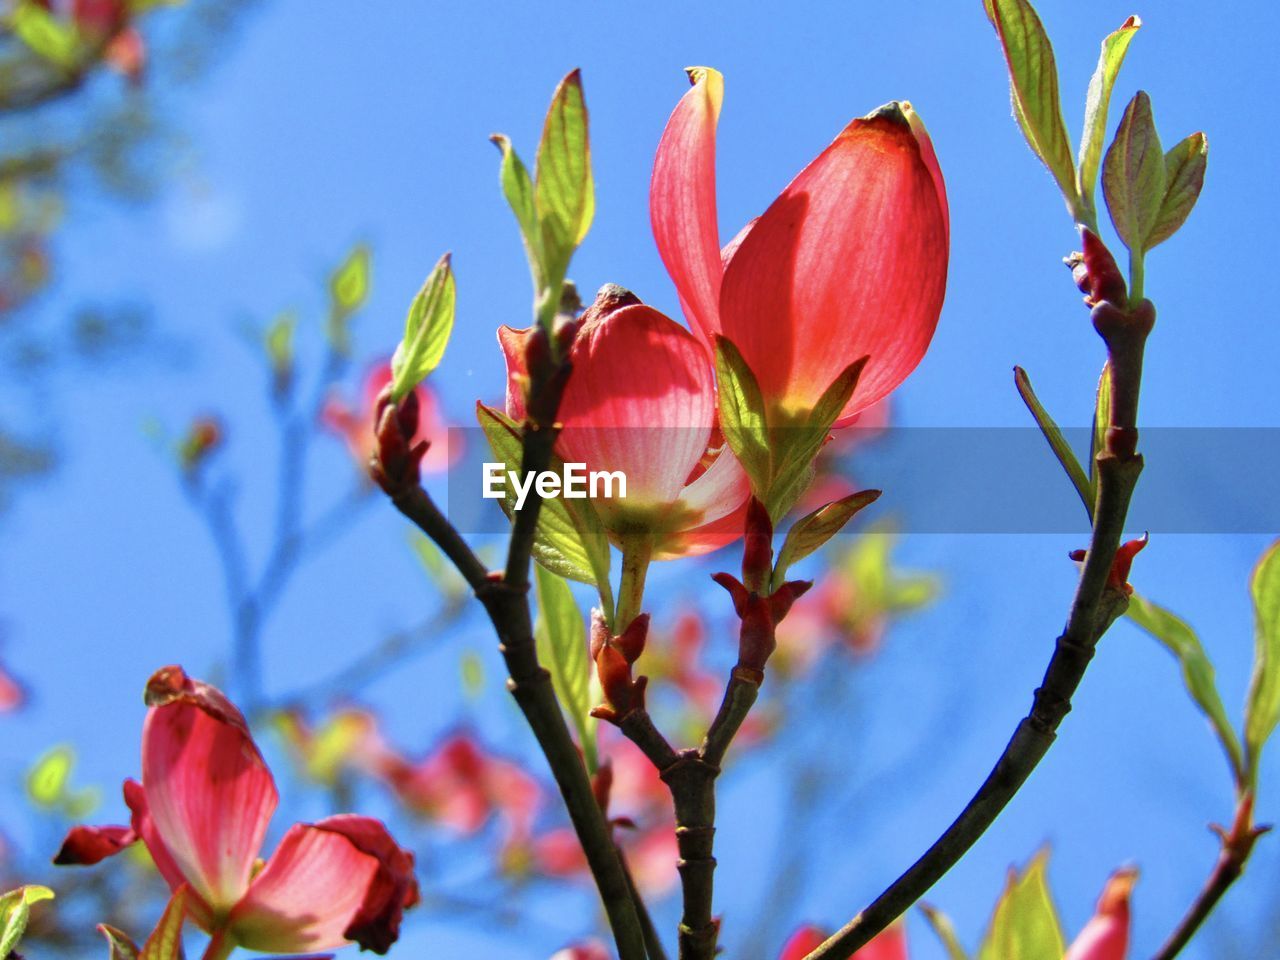 Dogwood blossoms against a blue sky 